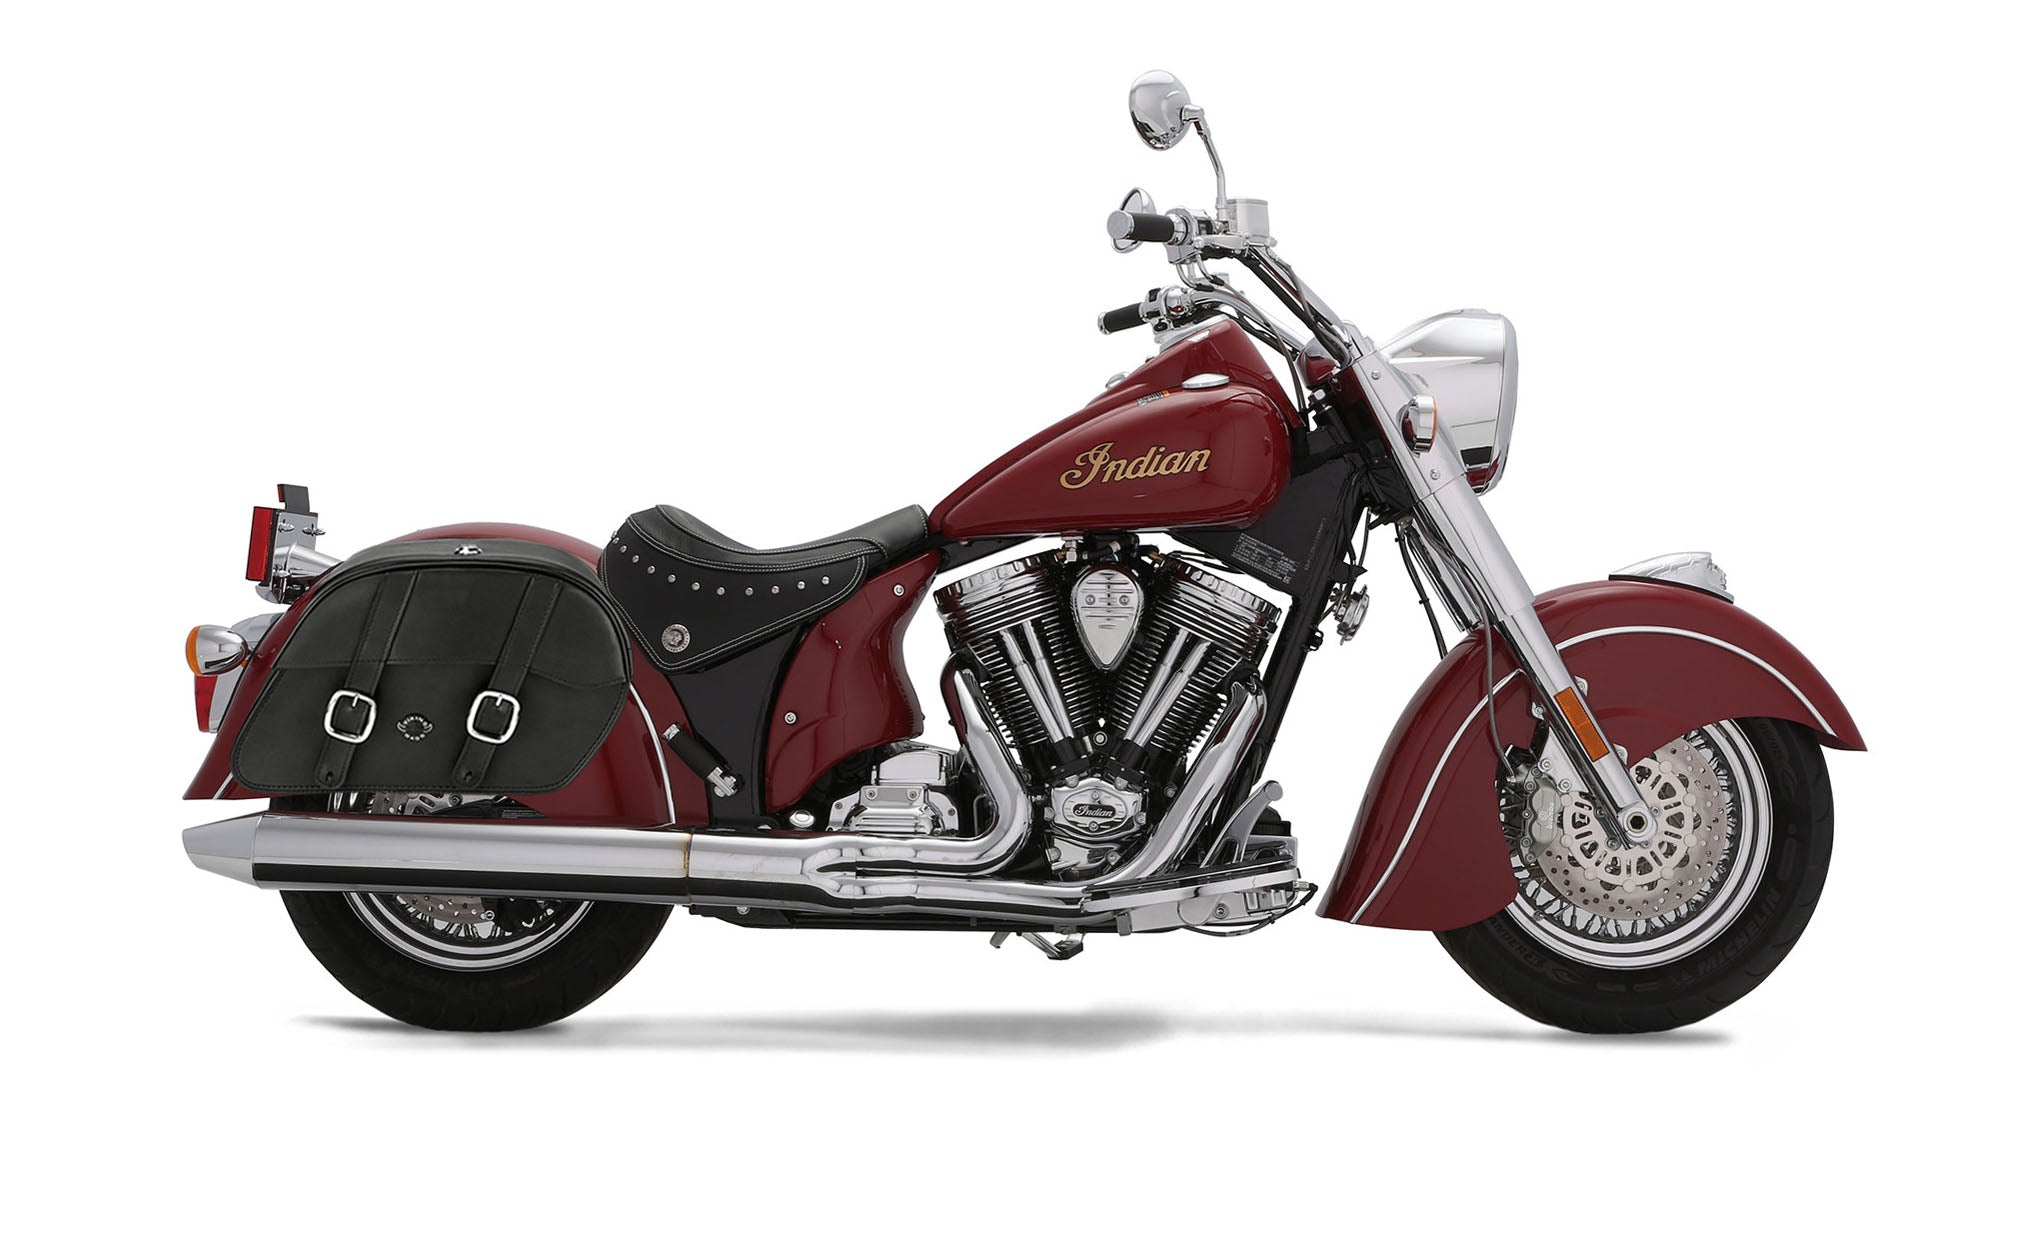 Viking Skarner Large Indian Chief Deluxe Leather Motorcycle Saddlebags on Bike Photo @expand